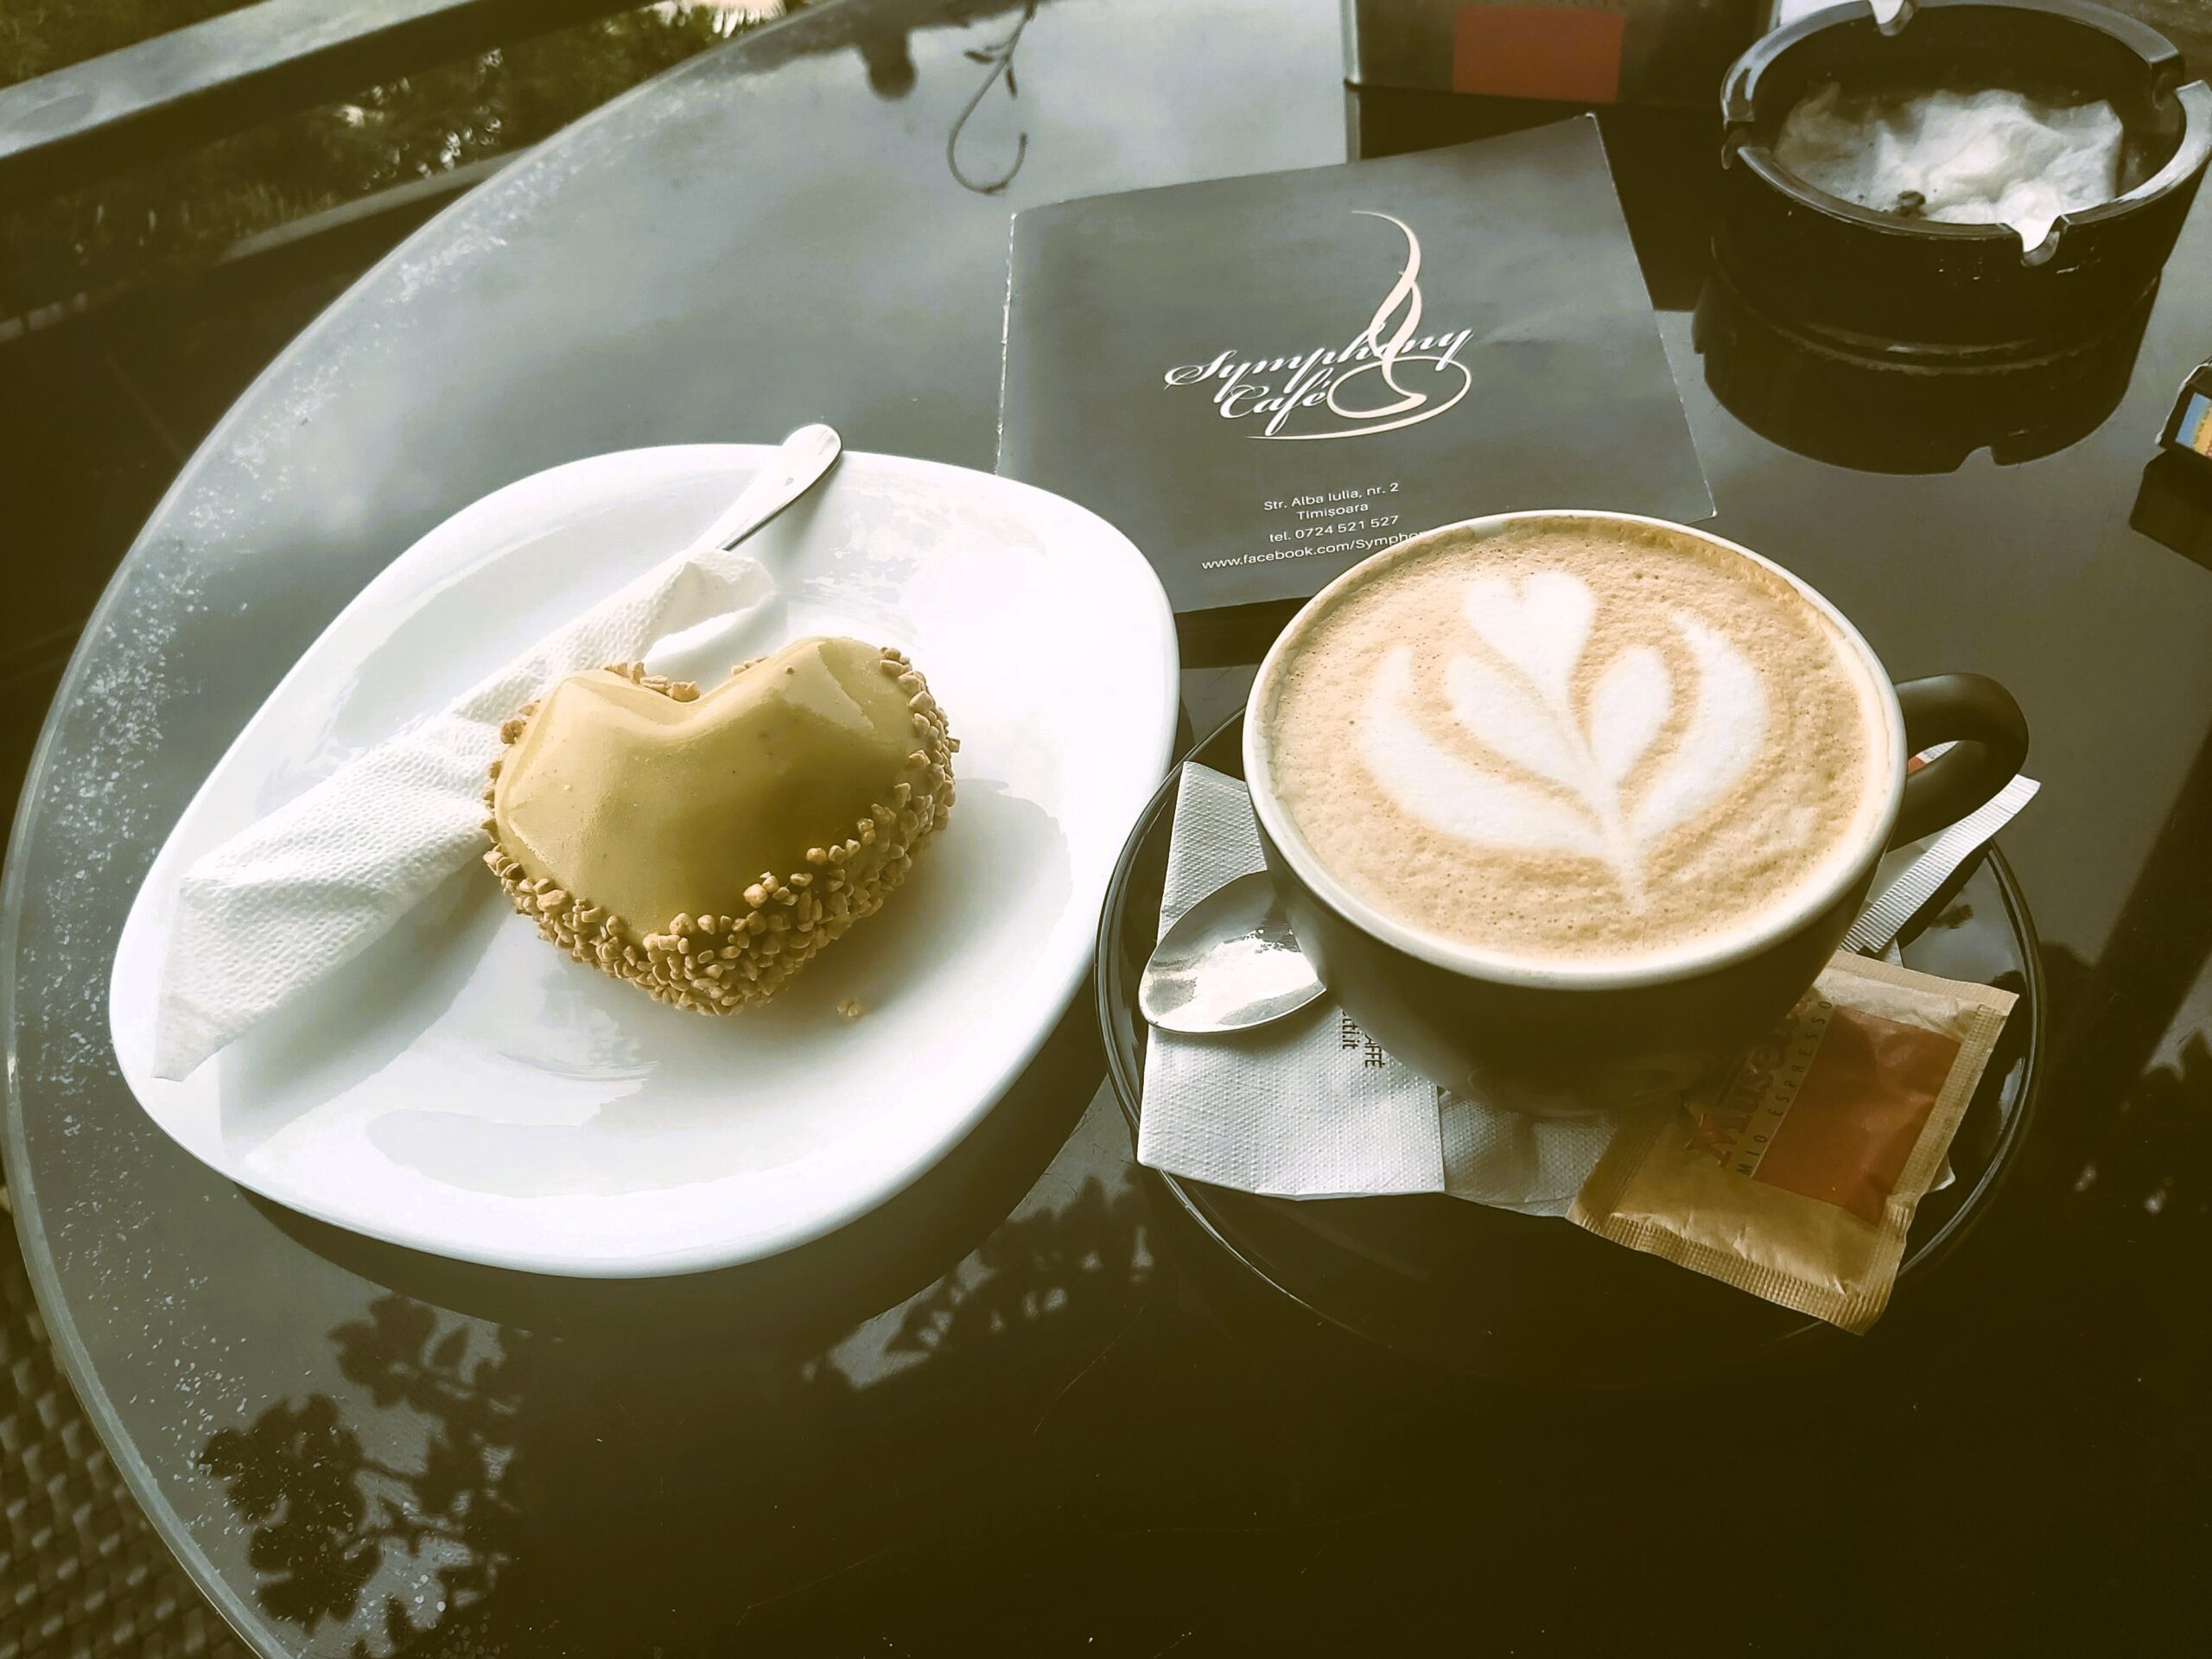 Pistachio dessert and coffee at Symphony Cafe in Timisoara, Romania.